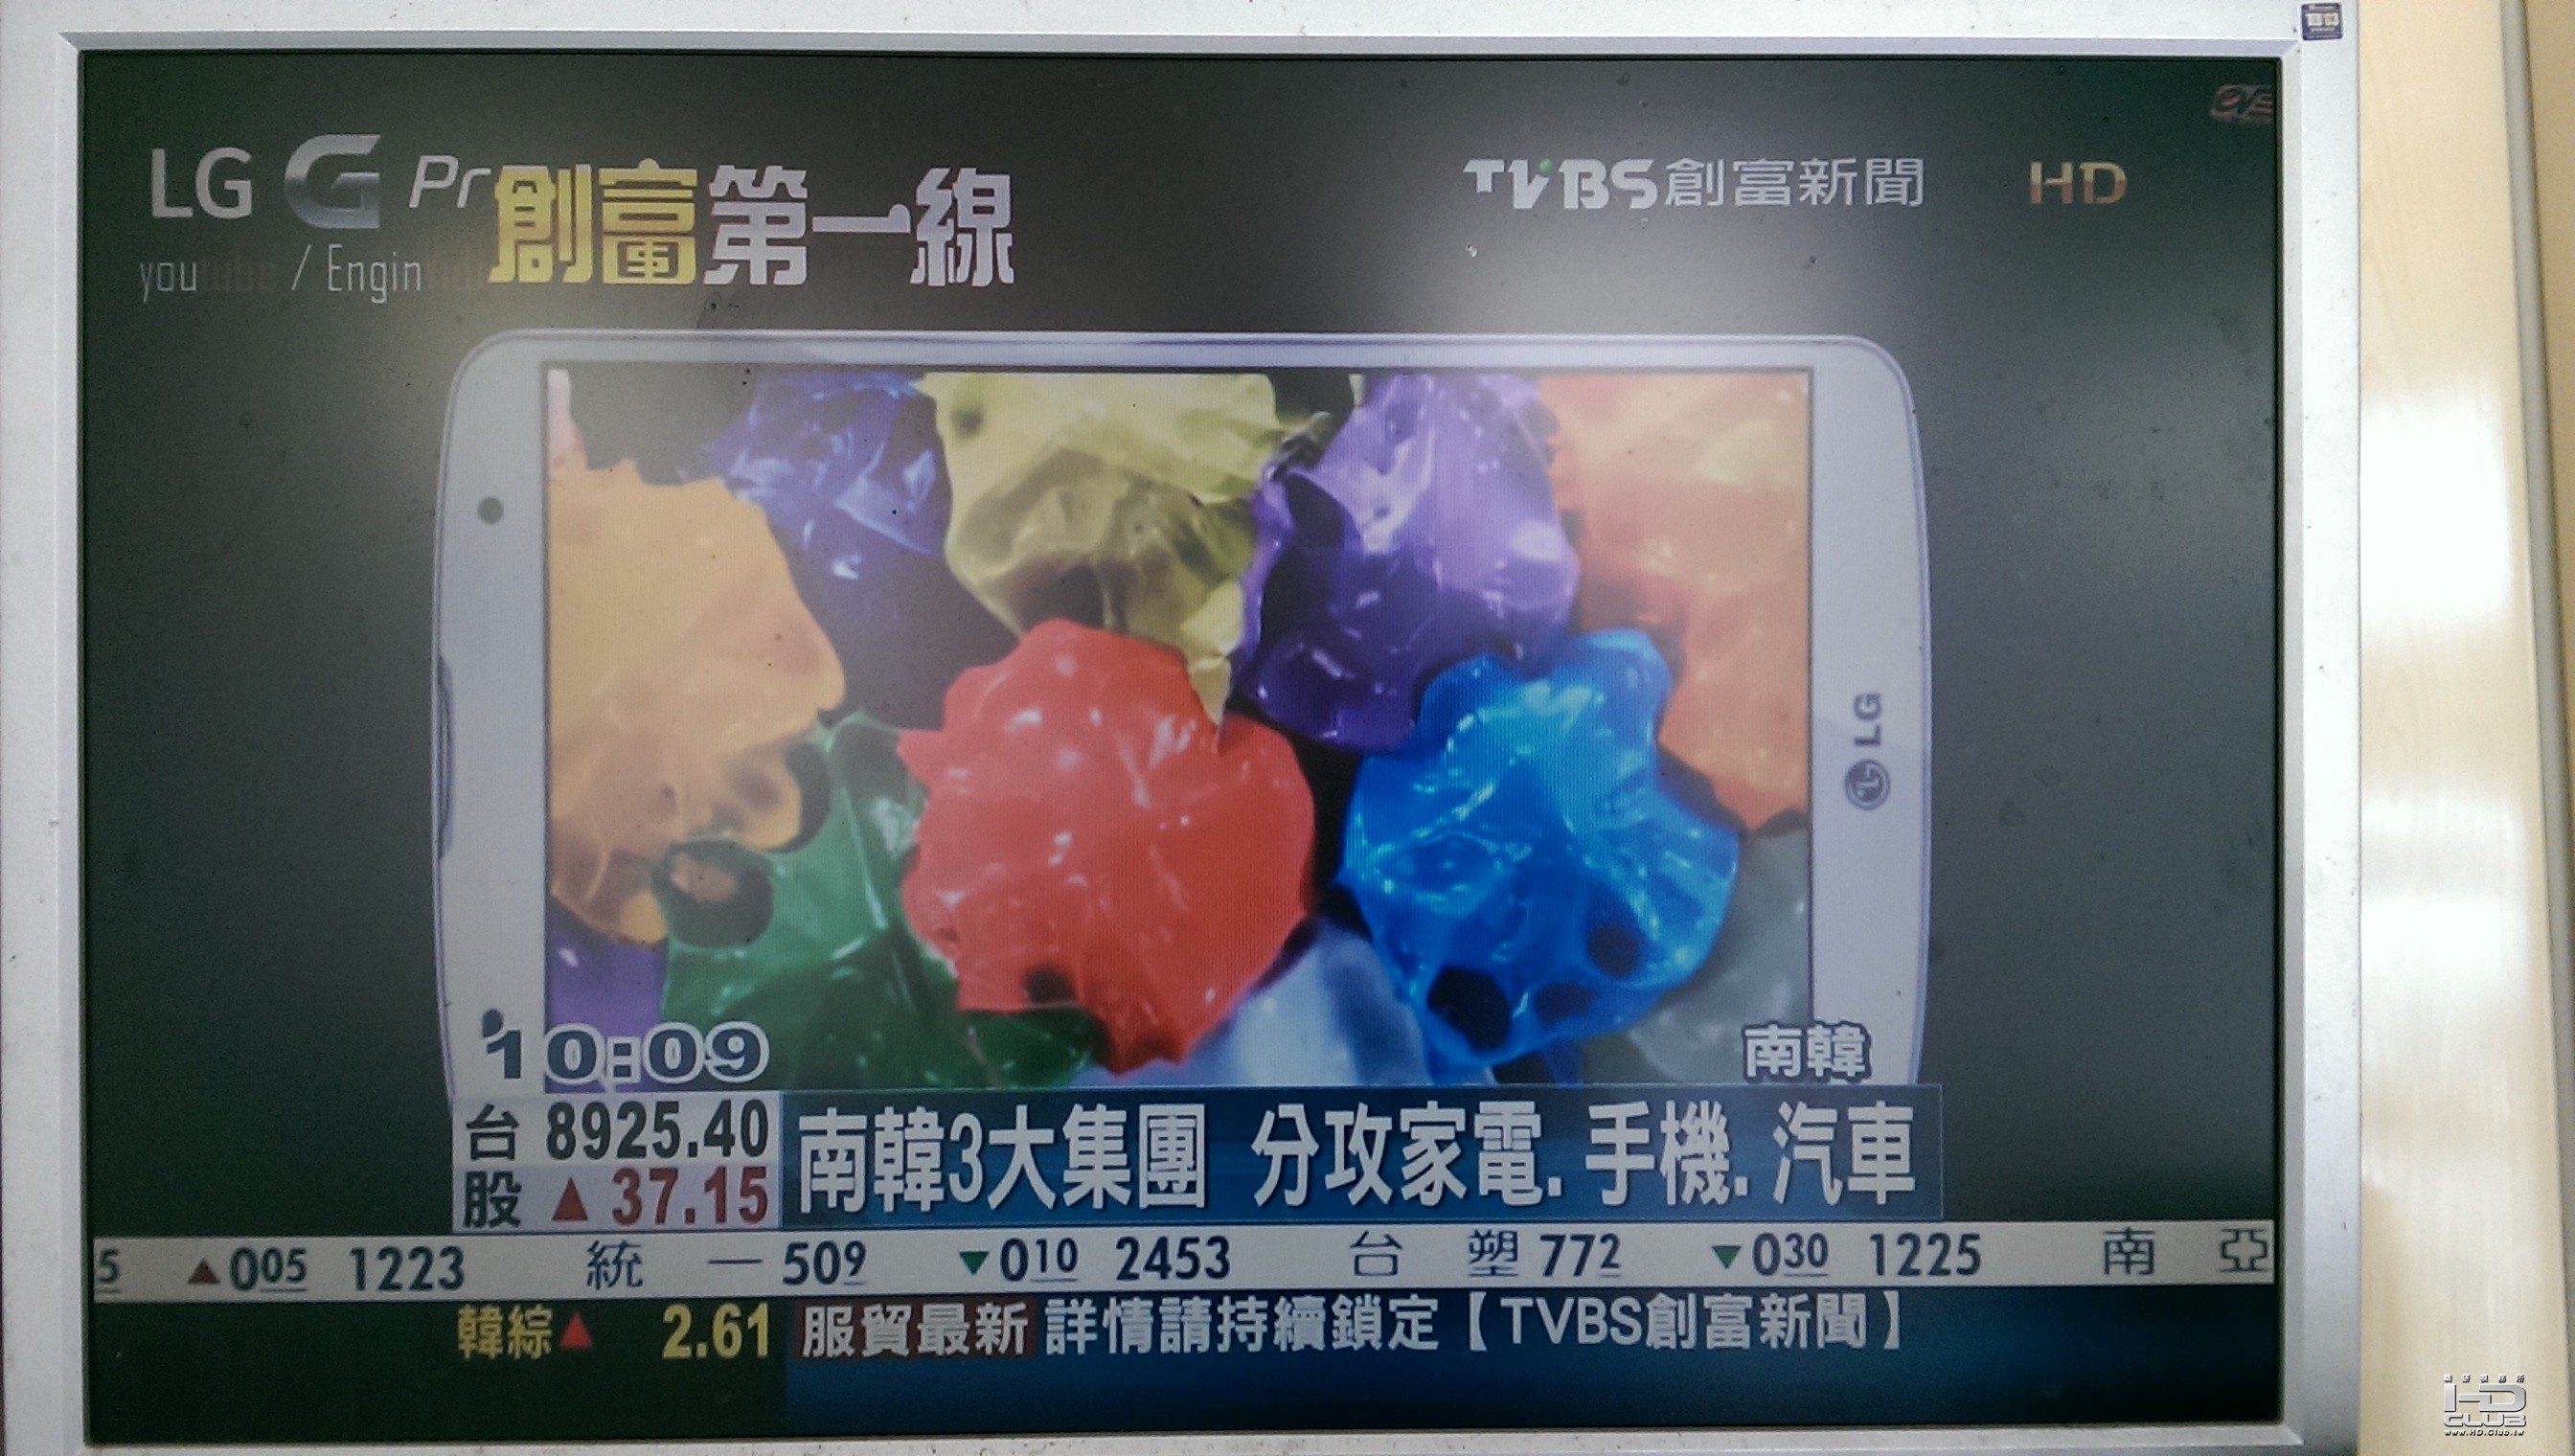 TVBS HD (4).jpg